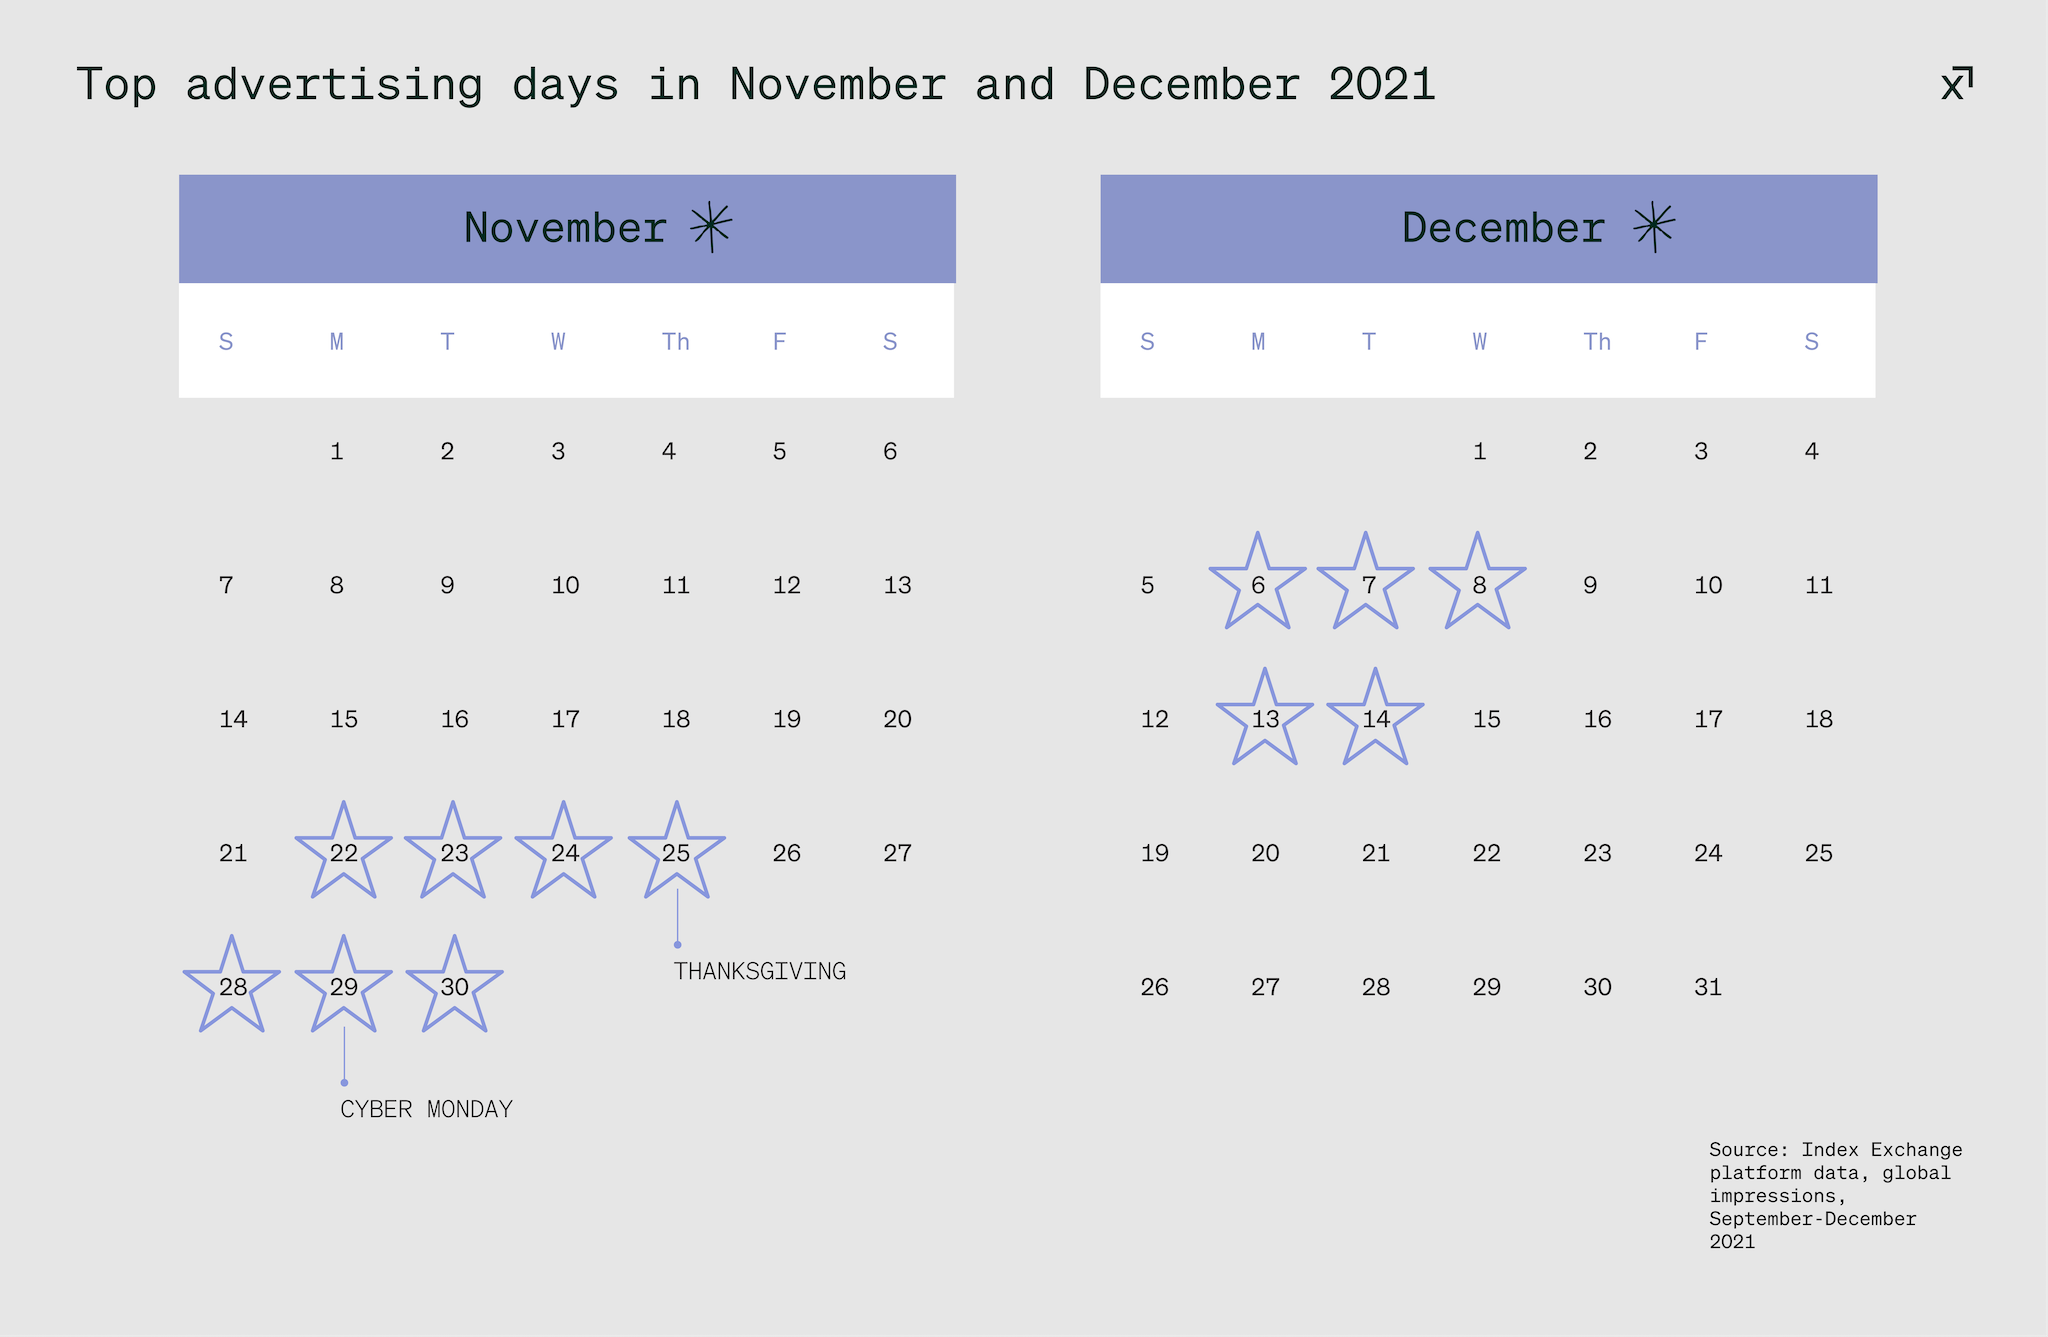 Calendar showing top advertising days in November and December 2021 per Index Exchange platform data